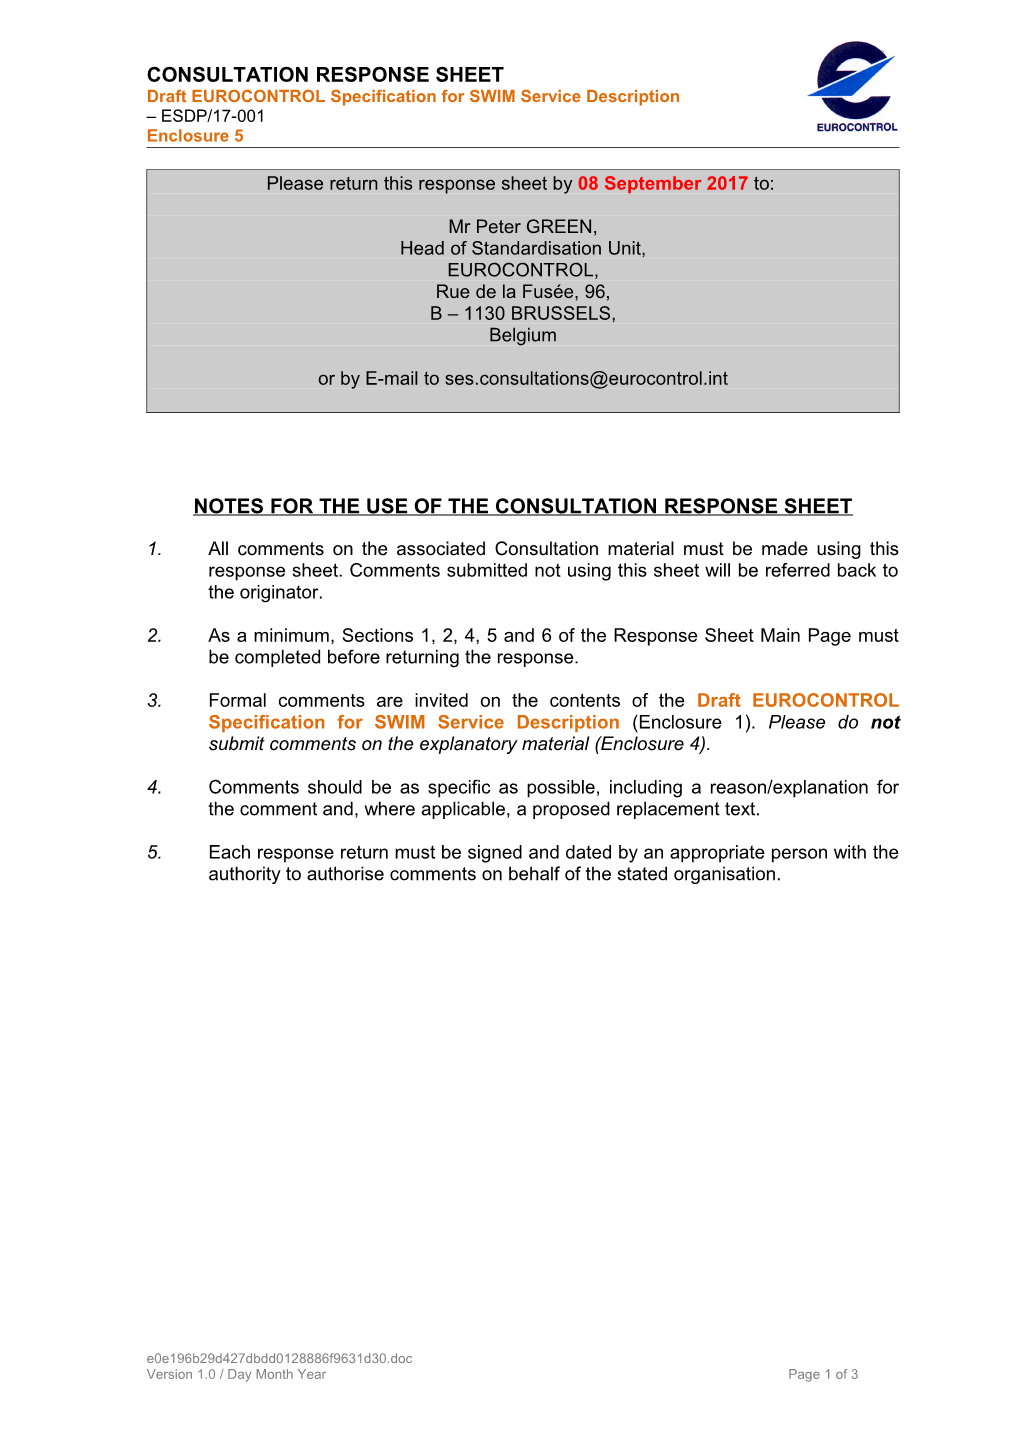 SRV Consultation Response Sheet